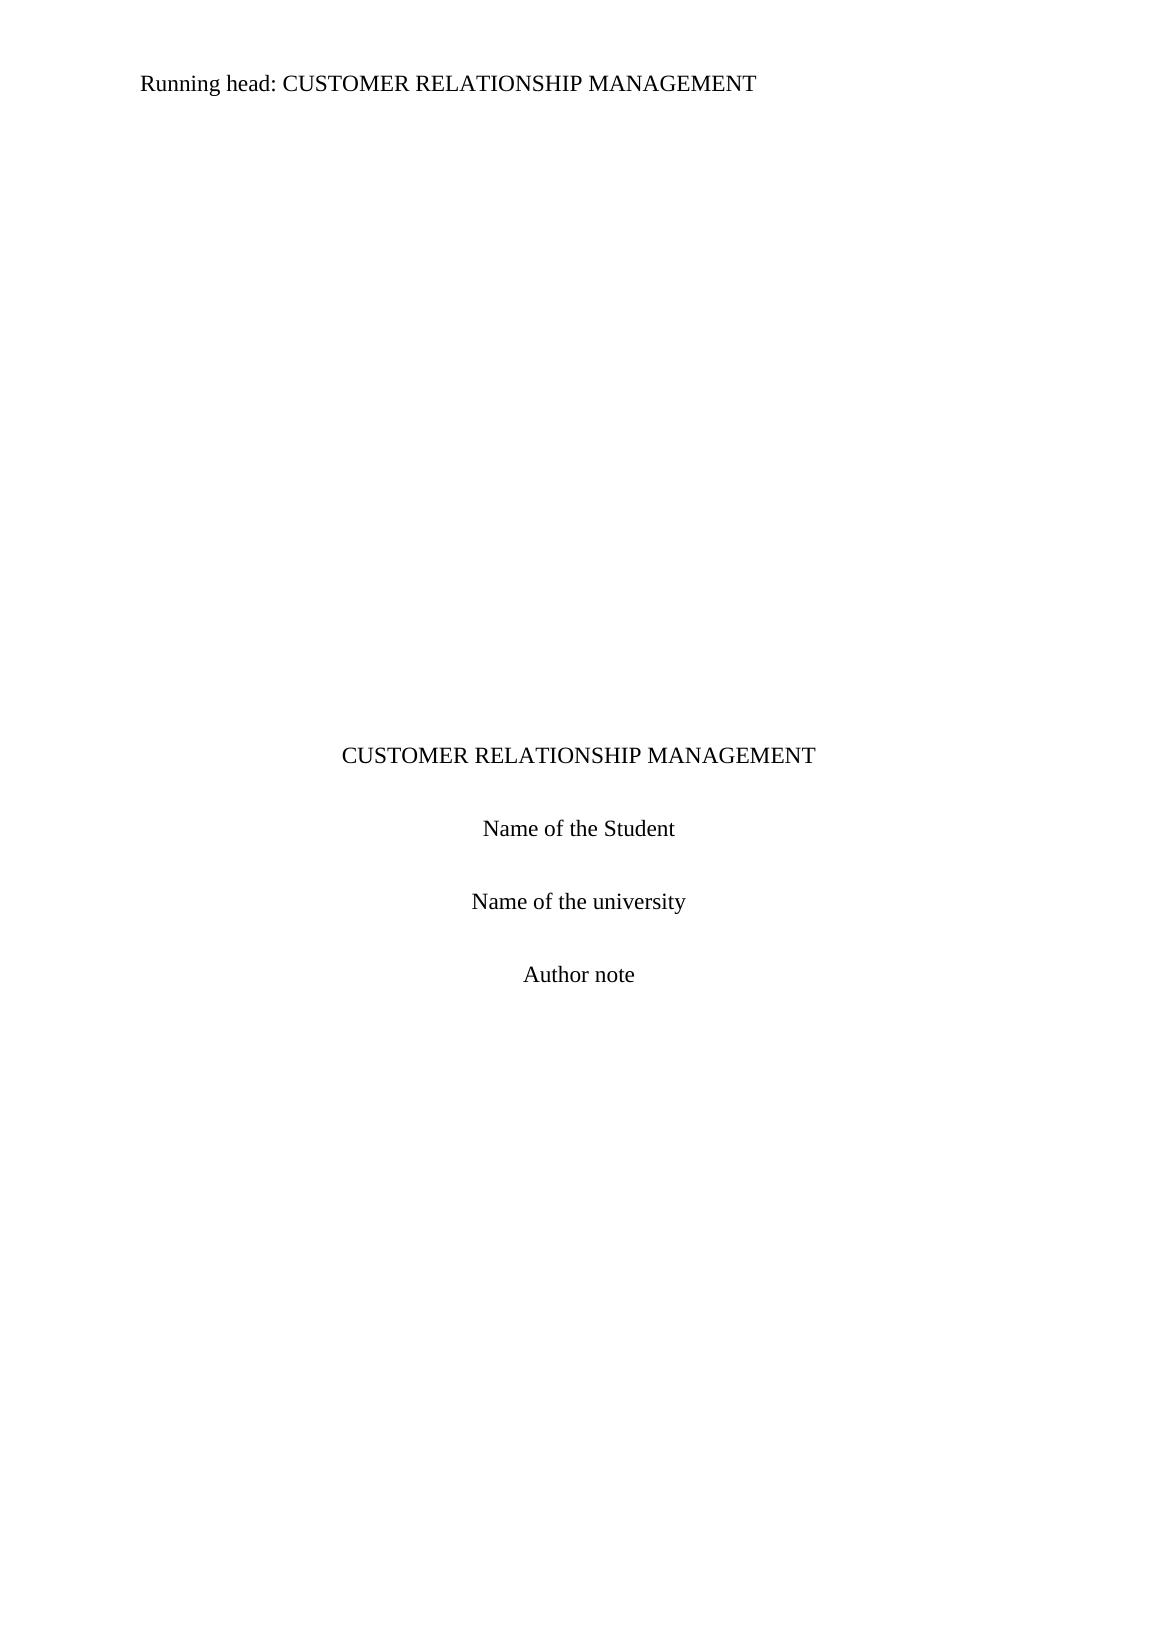 Assignment - Customer Relationship Management_1